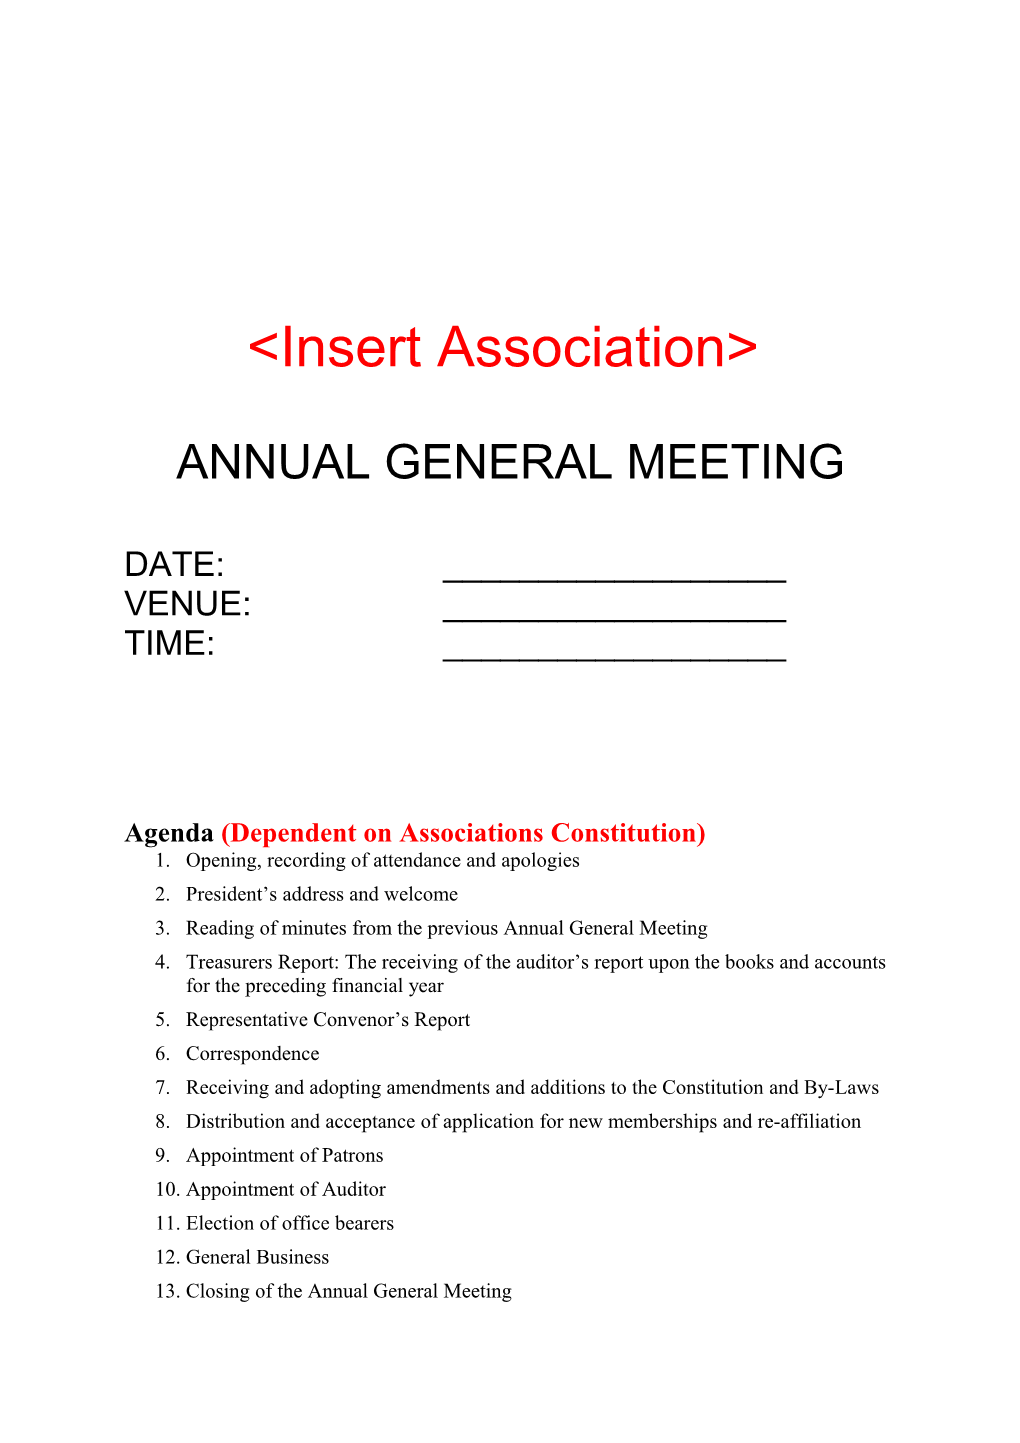 Agenda(Dependent on Associations Constitution)